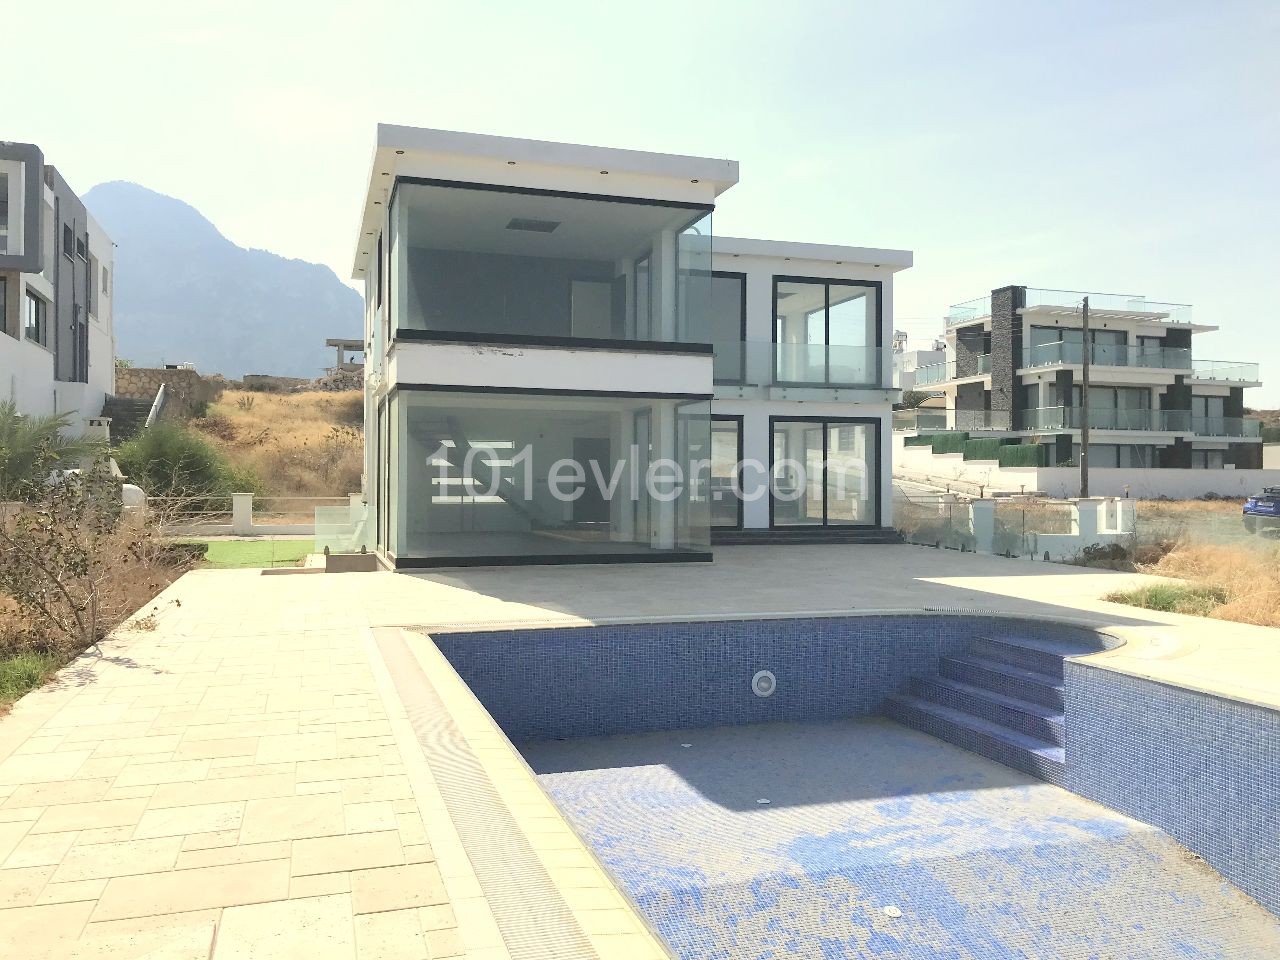 Kyrenia, Karşıyaka sea front, zero to sea modern 3 bedroom villa. Infinity pool, huge basement. 05338403555